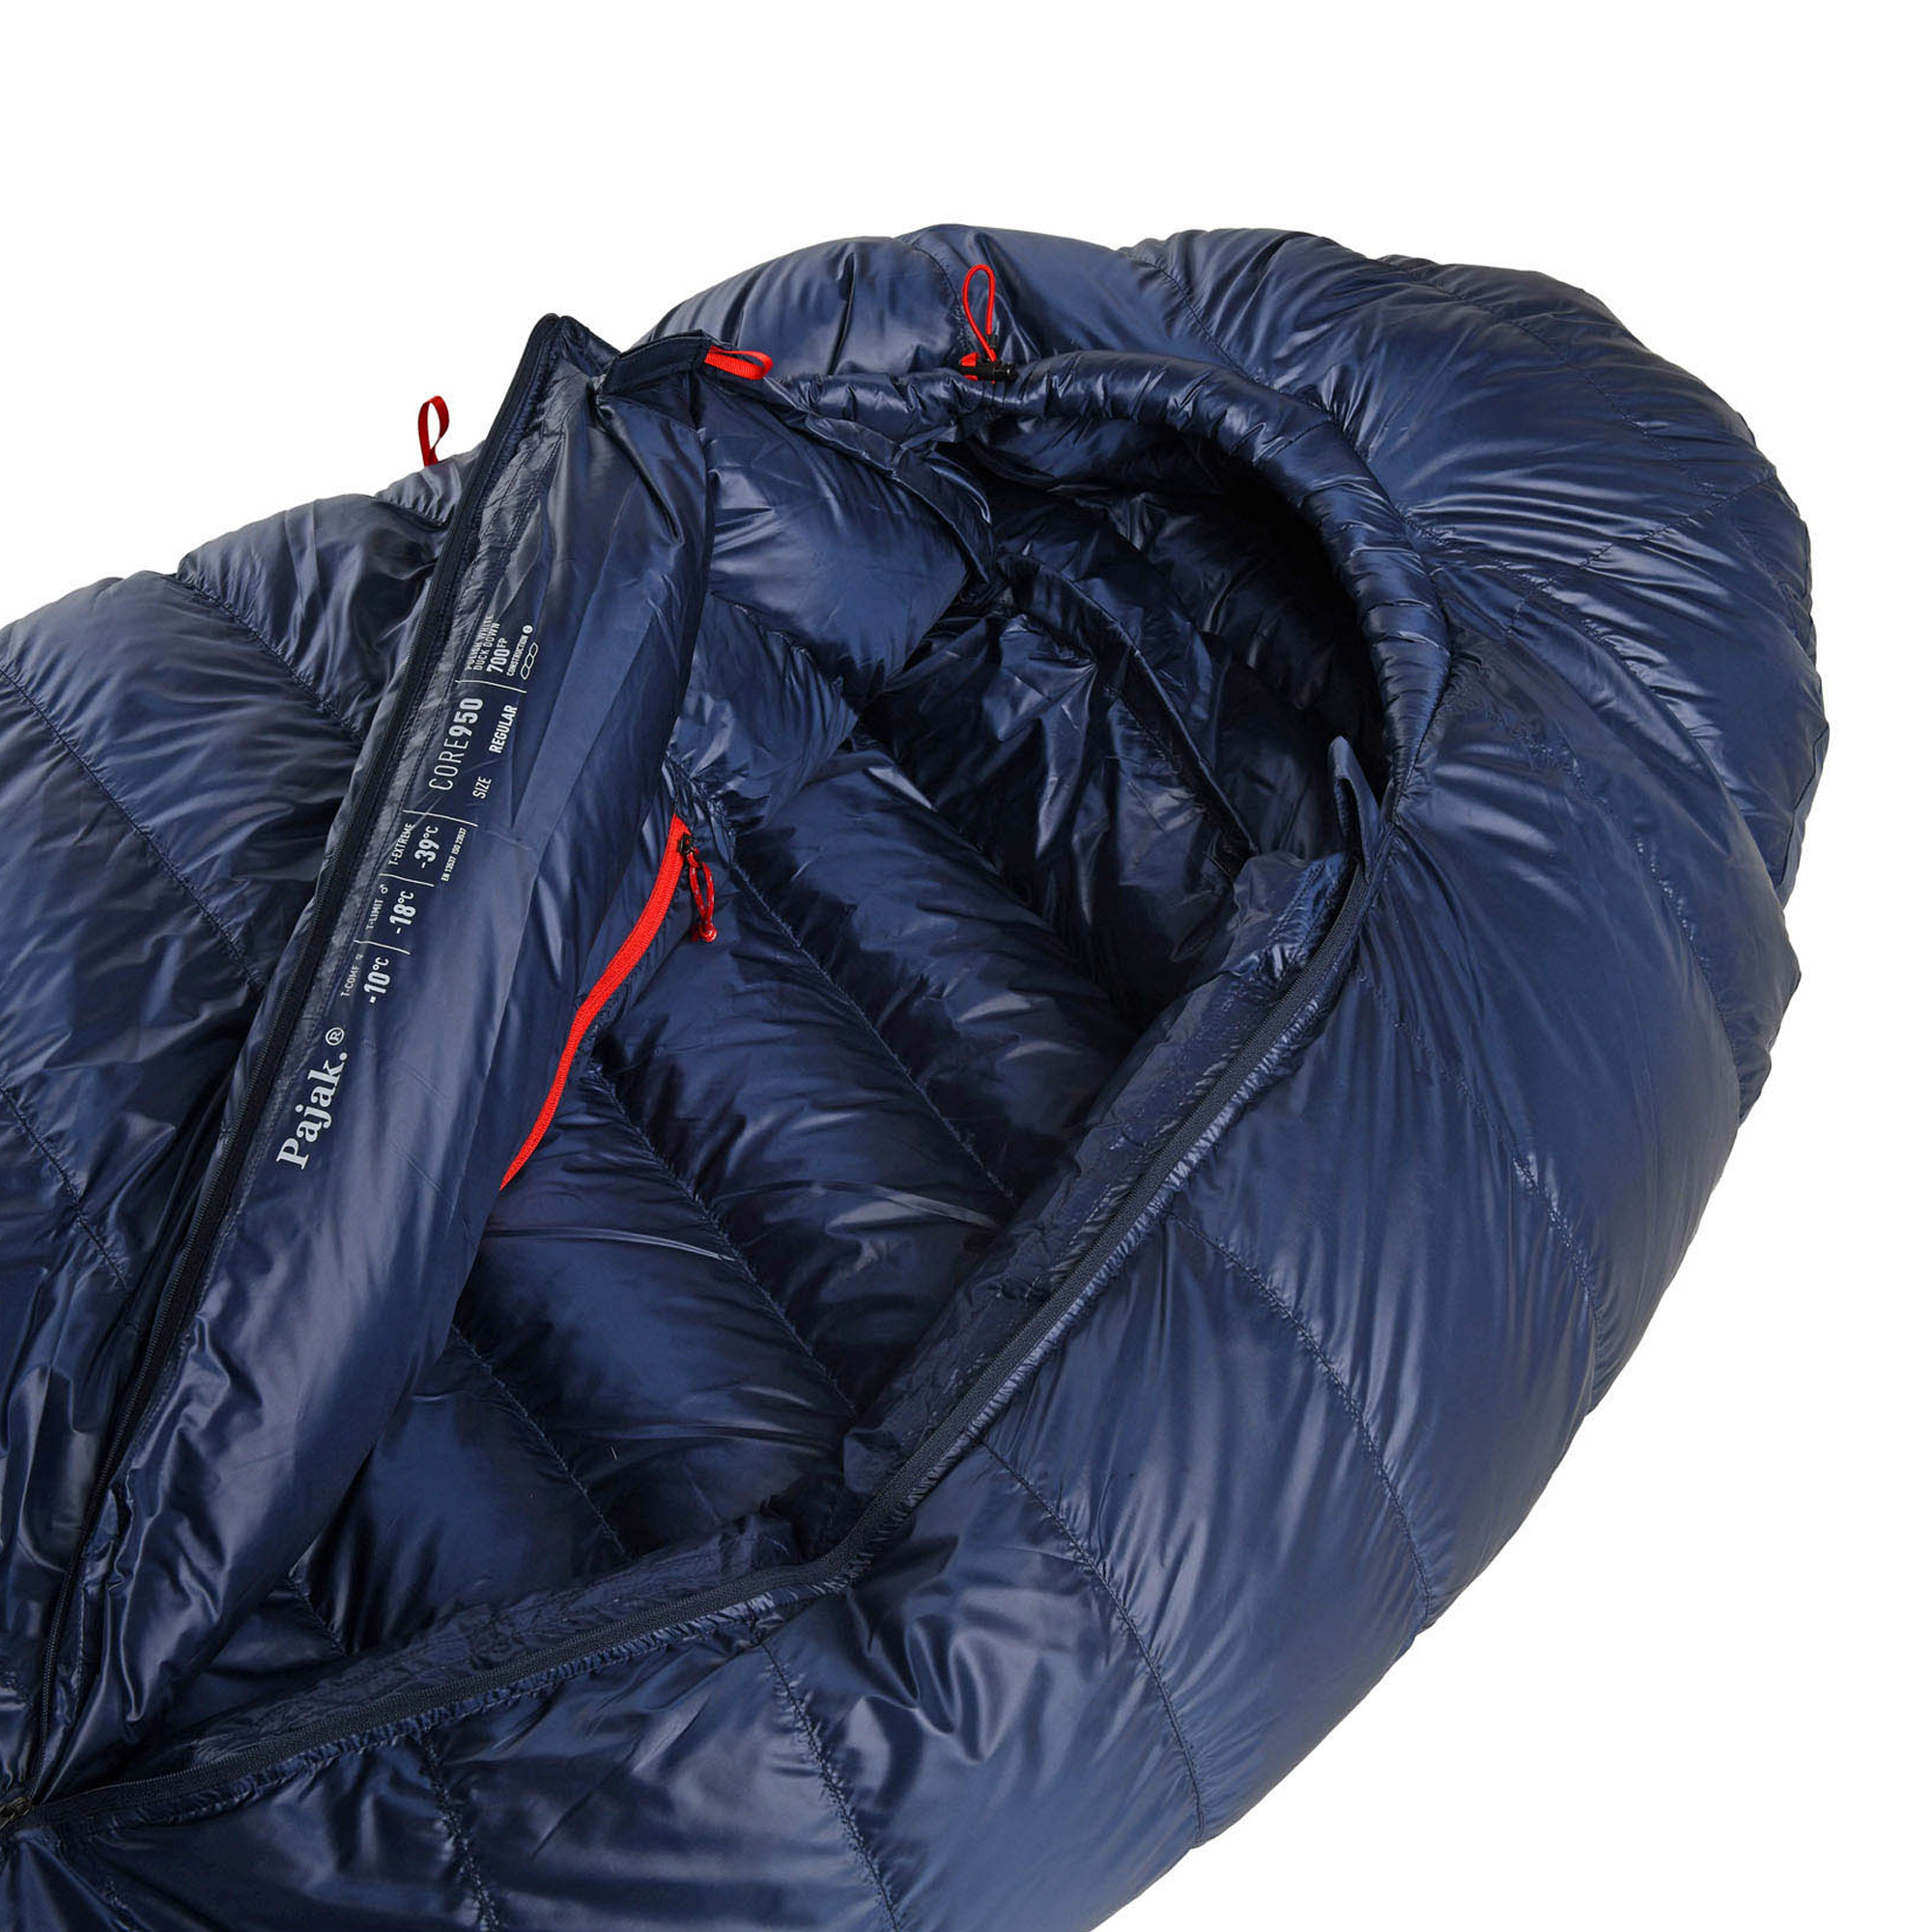 CORE, 950 sleeping bag, long, navy